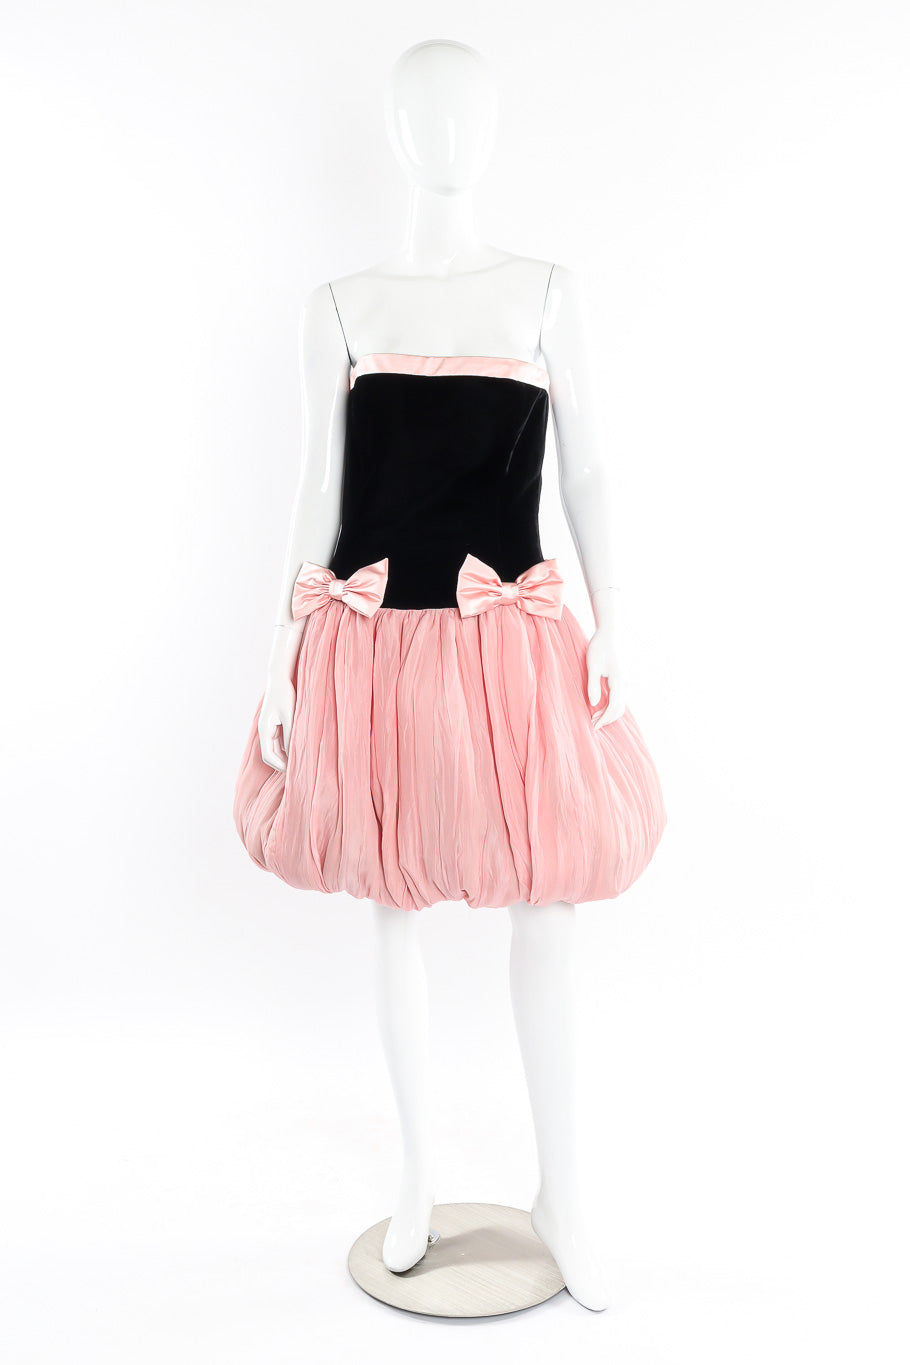 Bubble dress by Margaretha Ley for Escada mannequin front @recessla